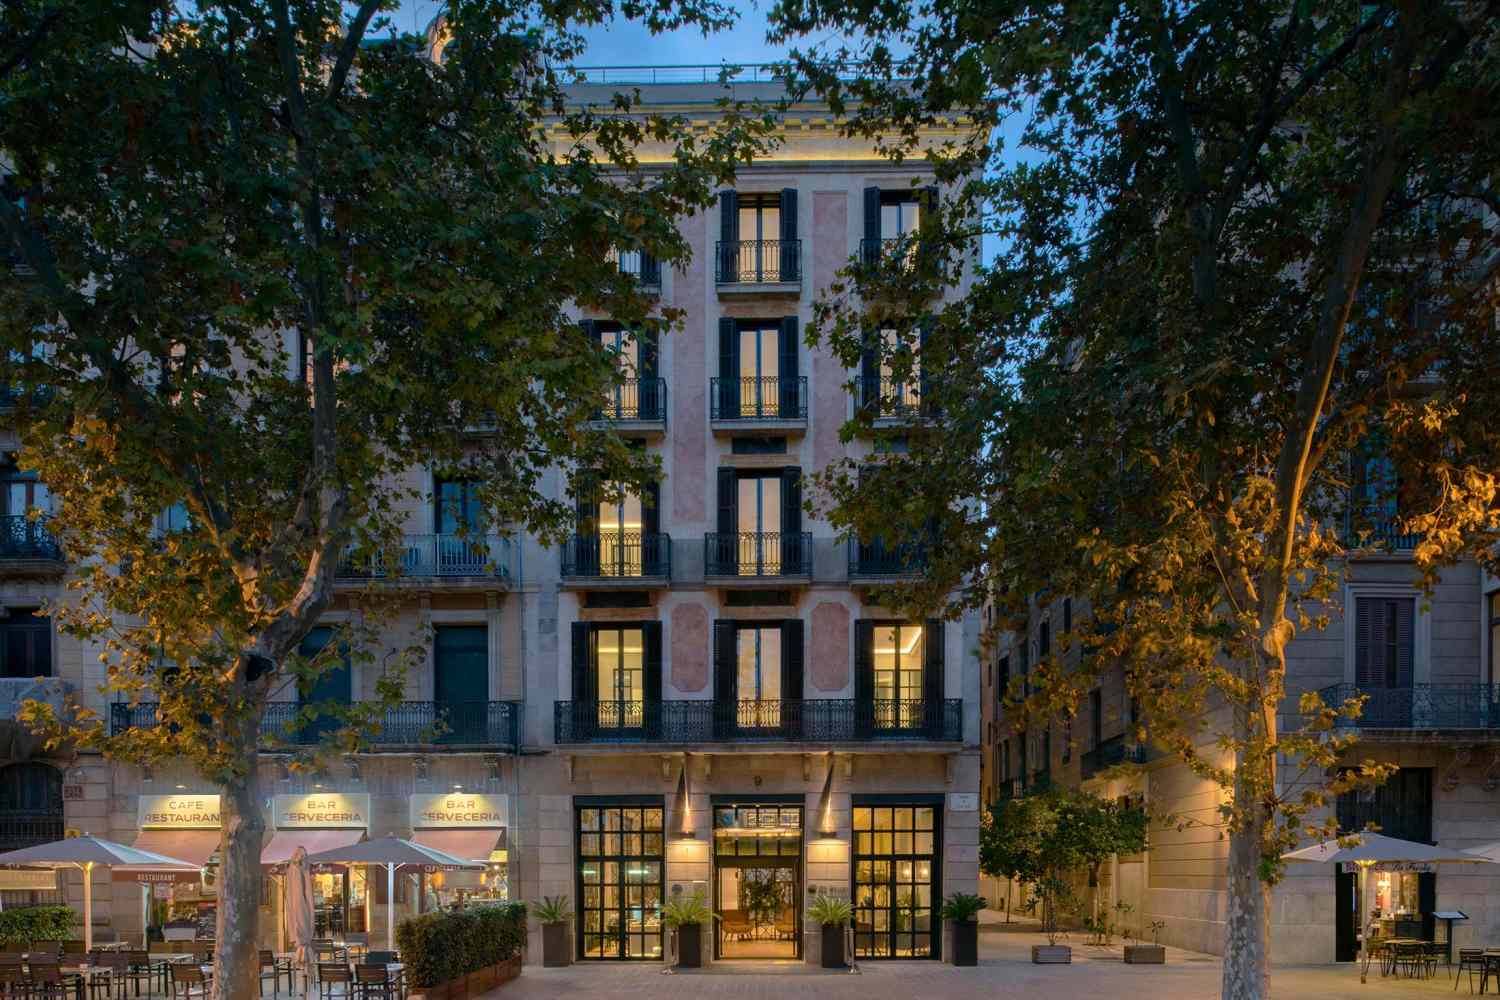 Serras Hotel Barcelona, Catalonia - Spain